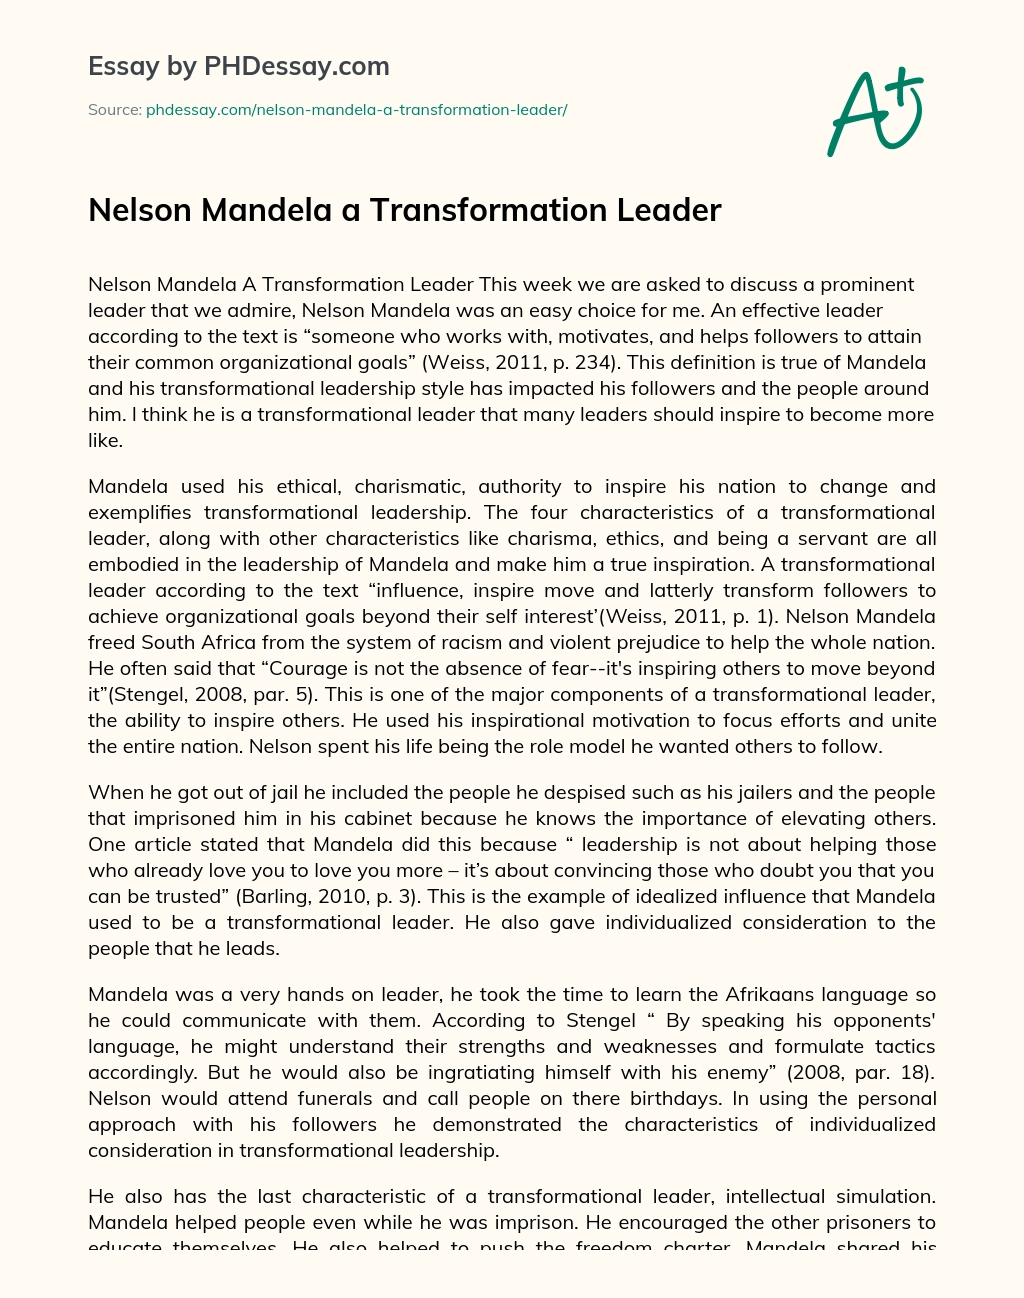 Nelson Mandela a Transformation Leader essay